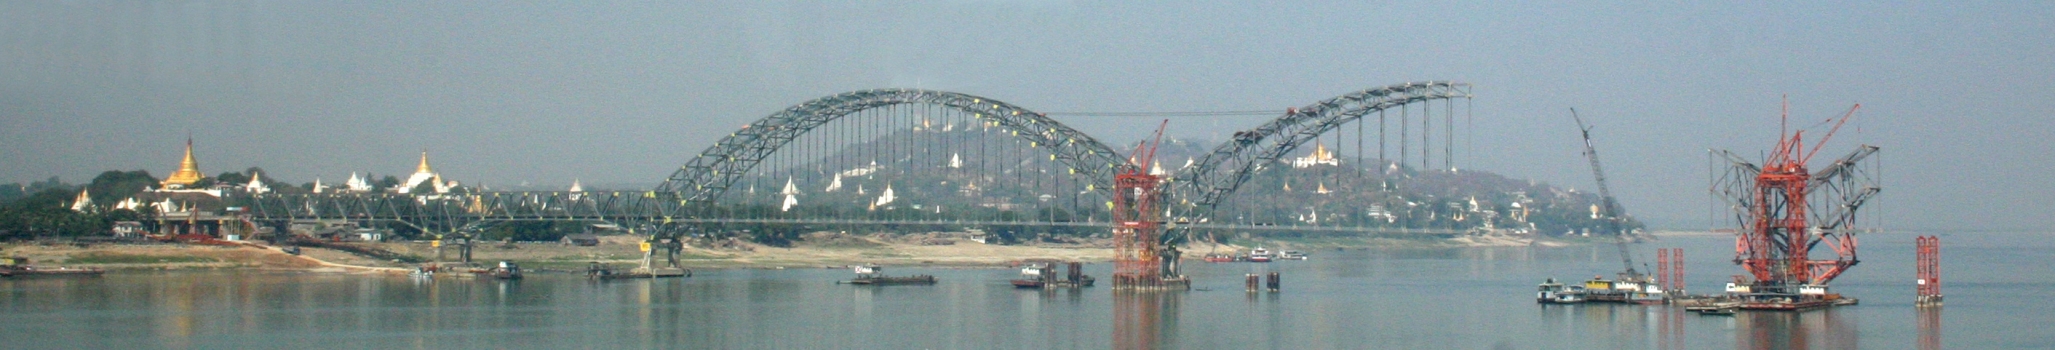 Pont Irrawaddy